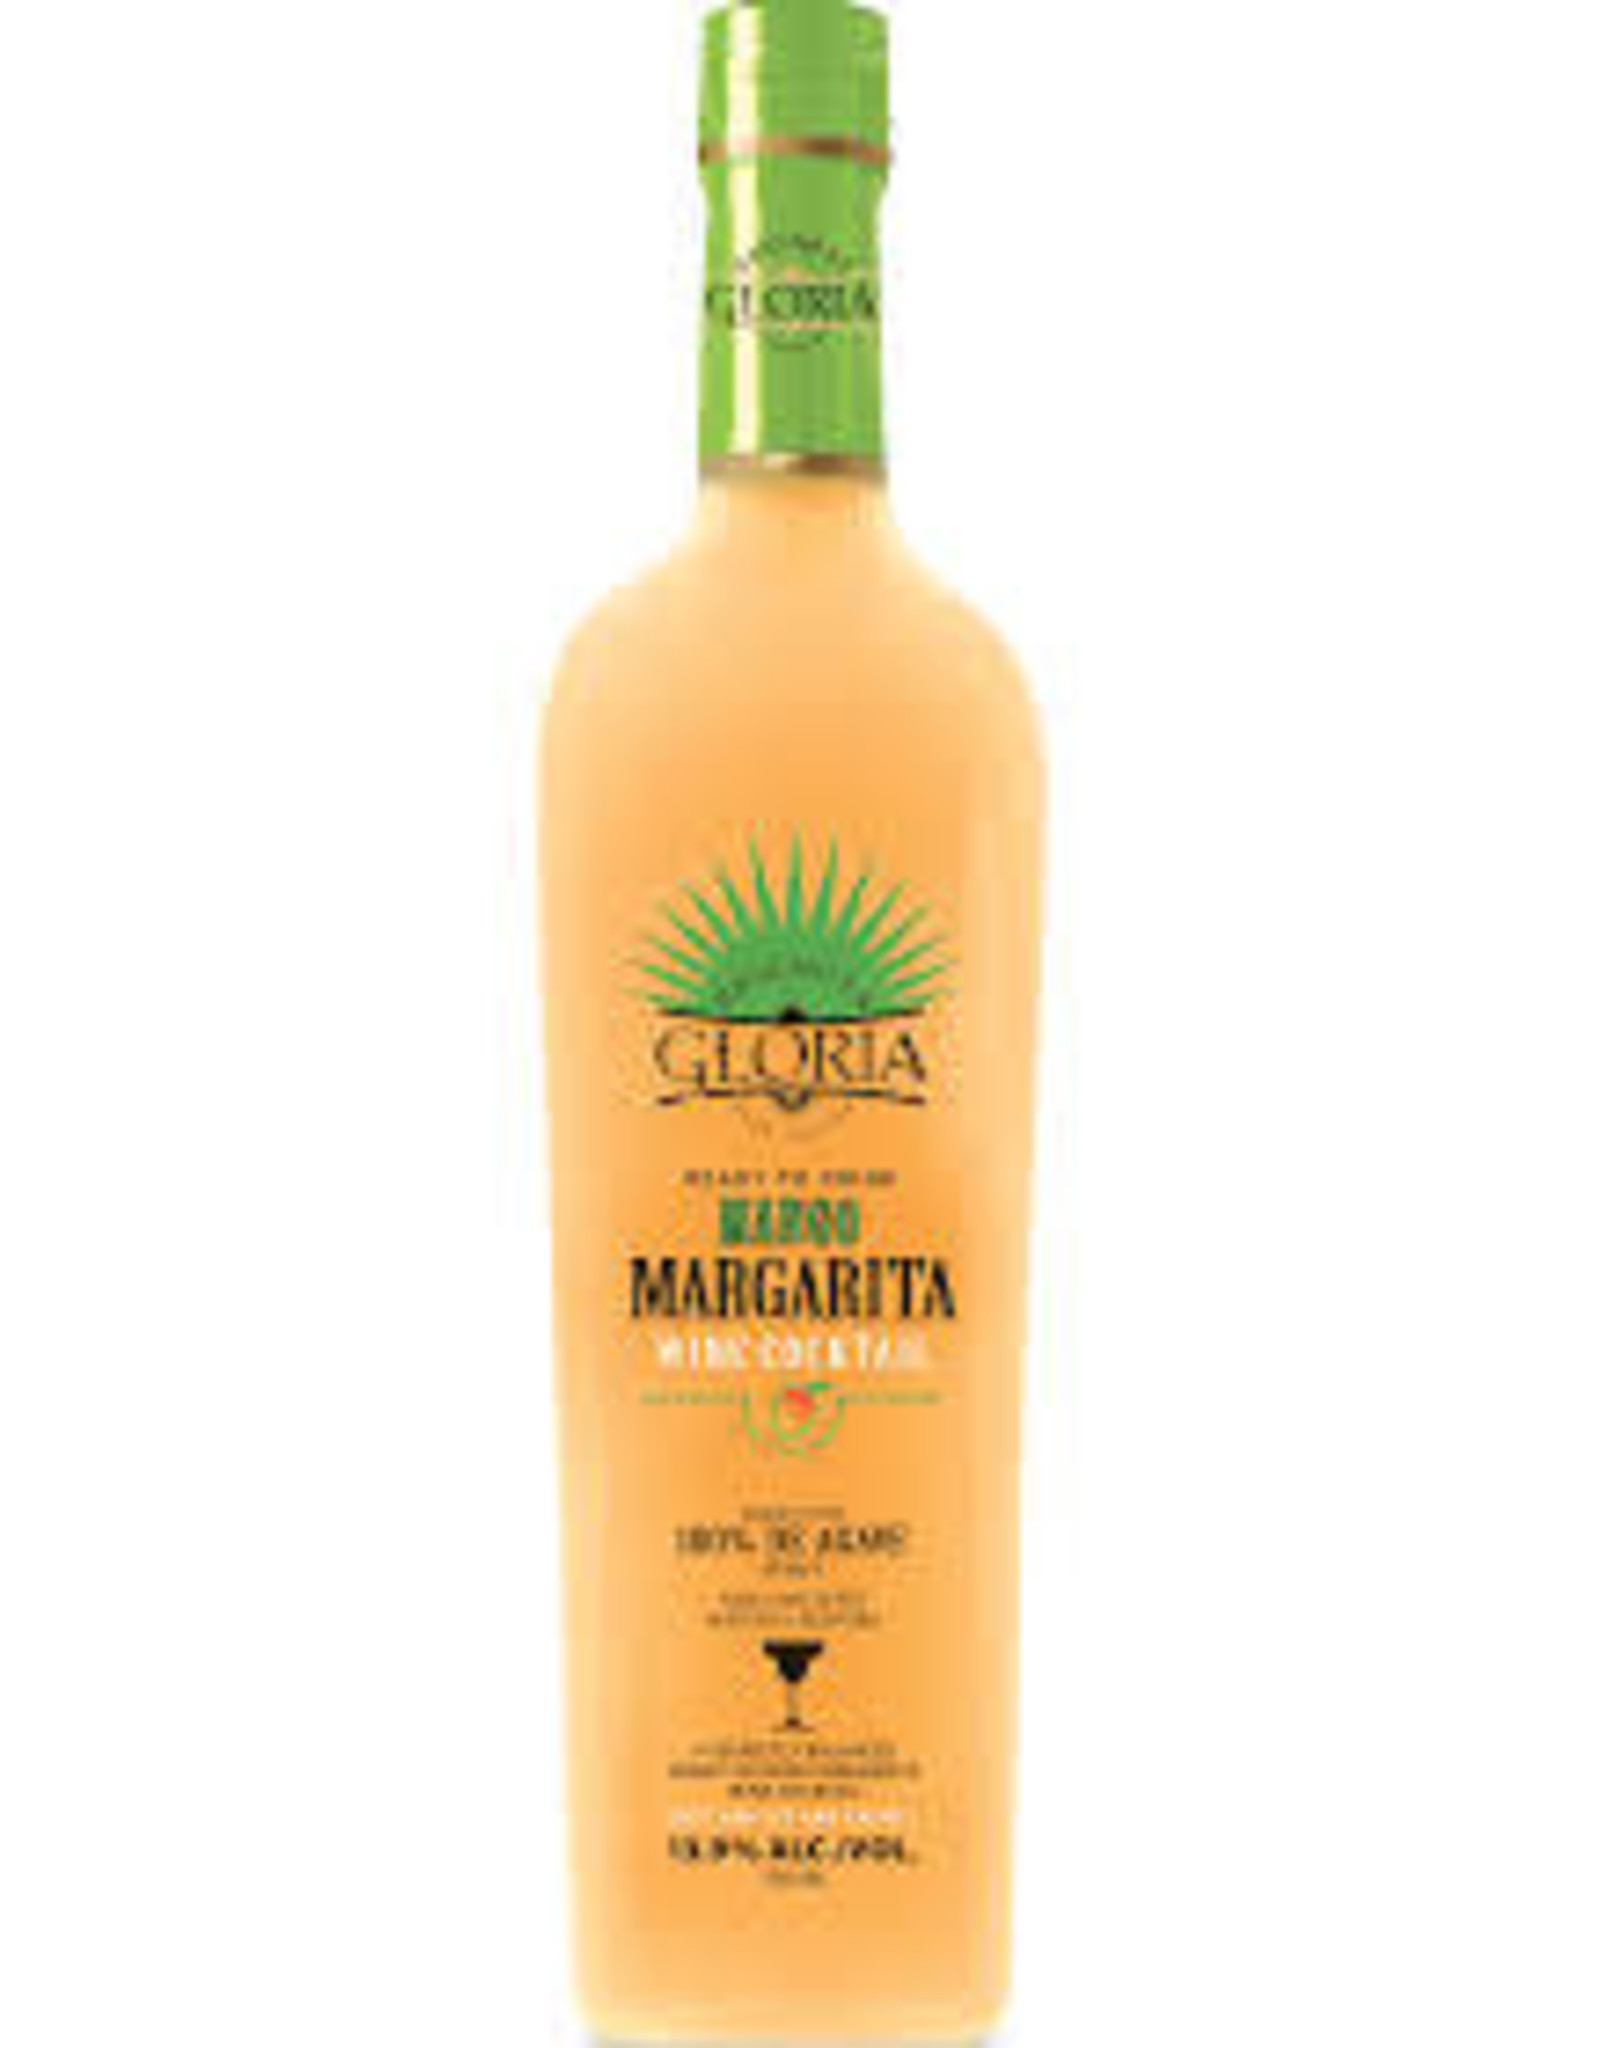 rancho la gloria margarita ready to drink